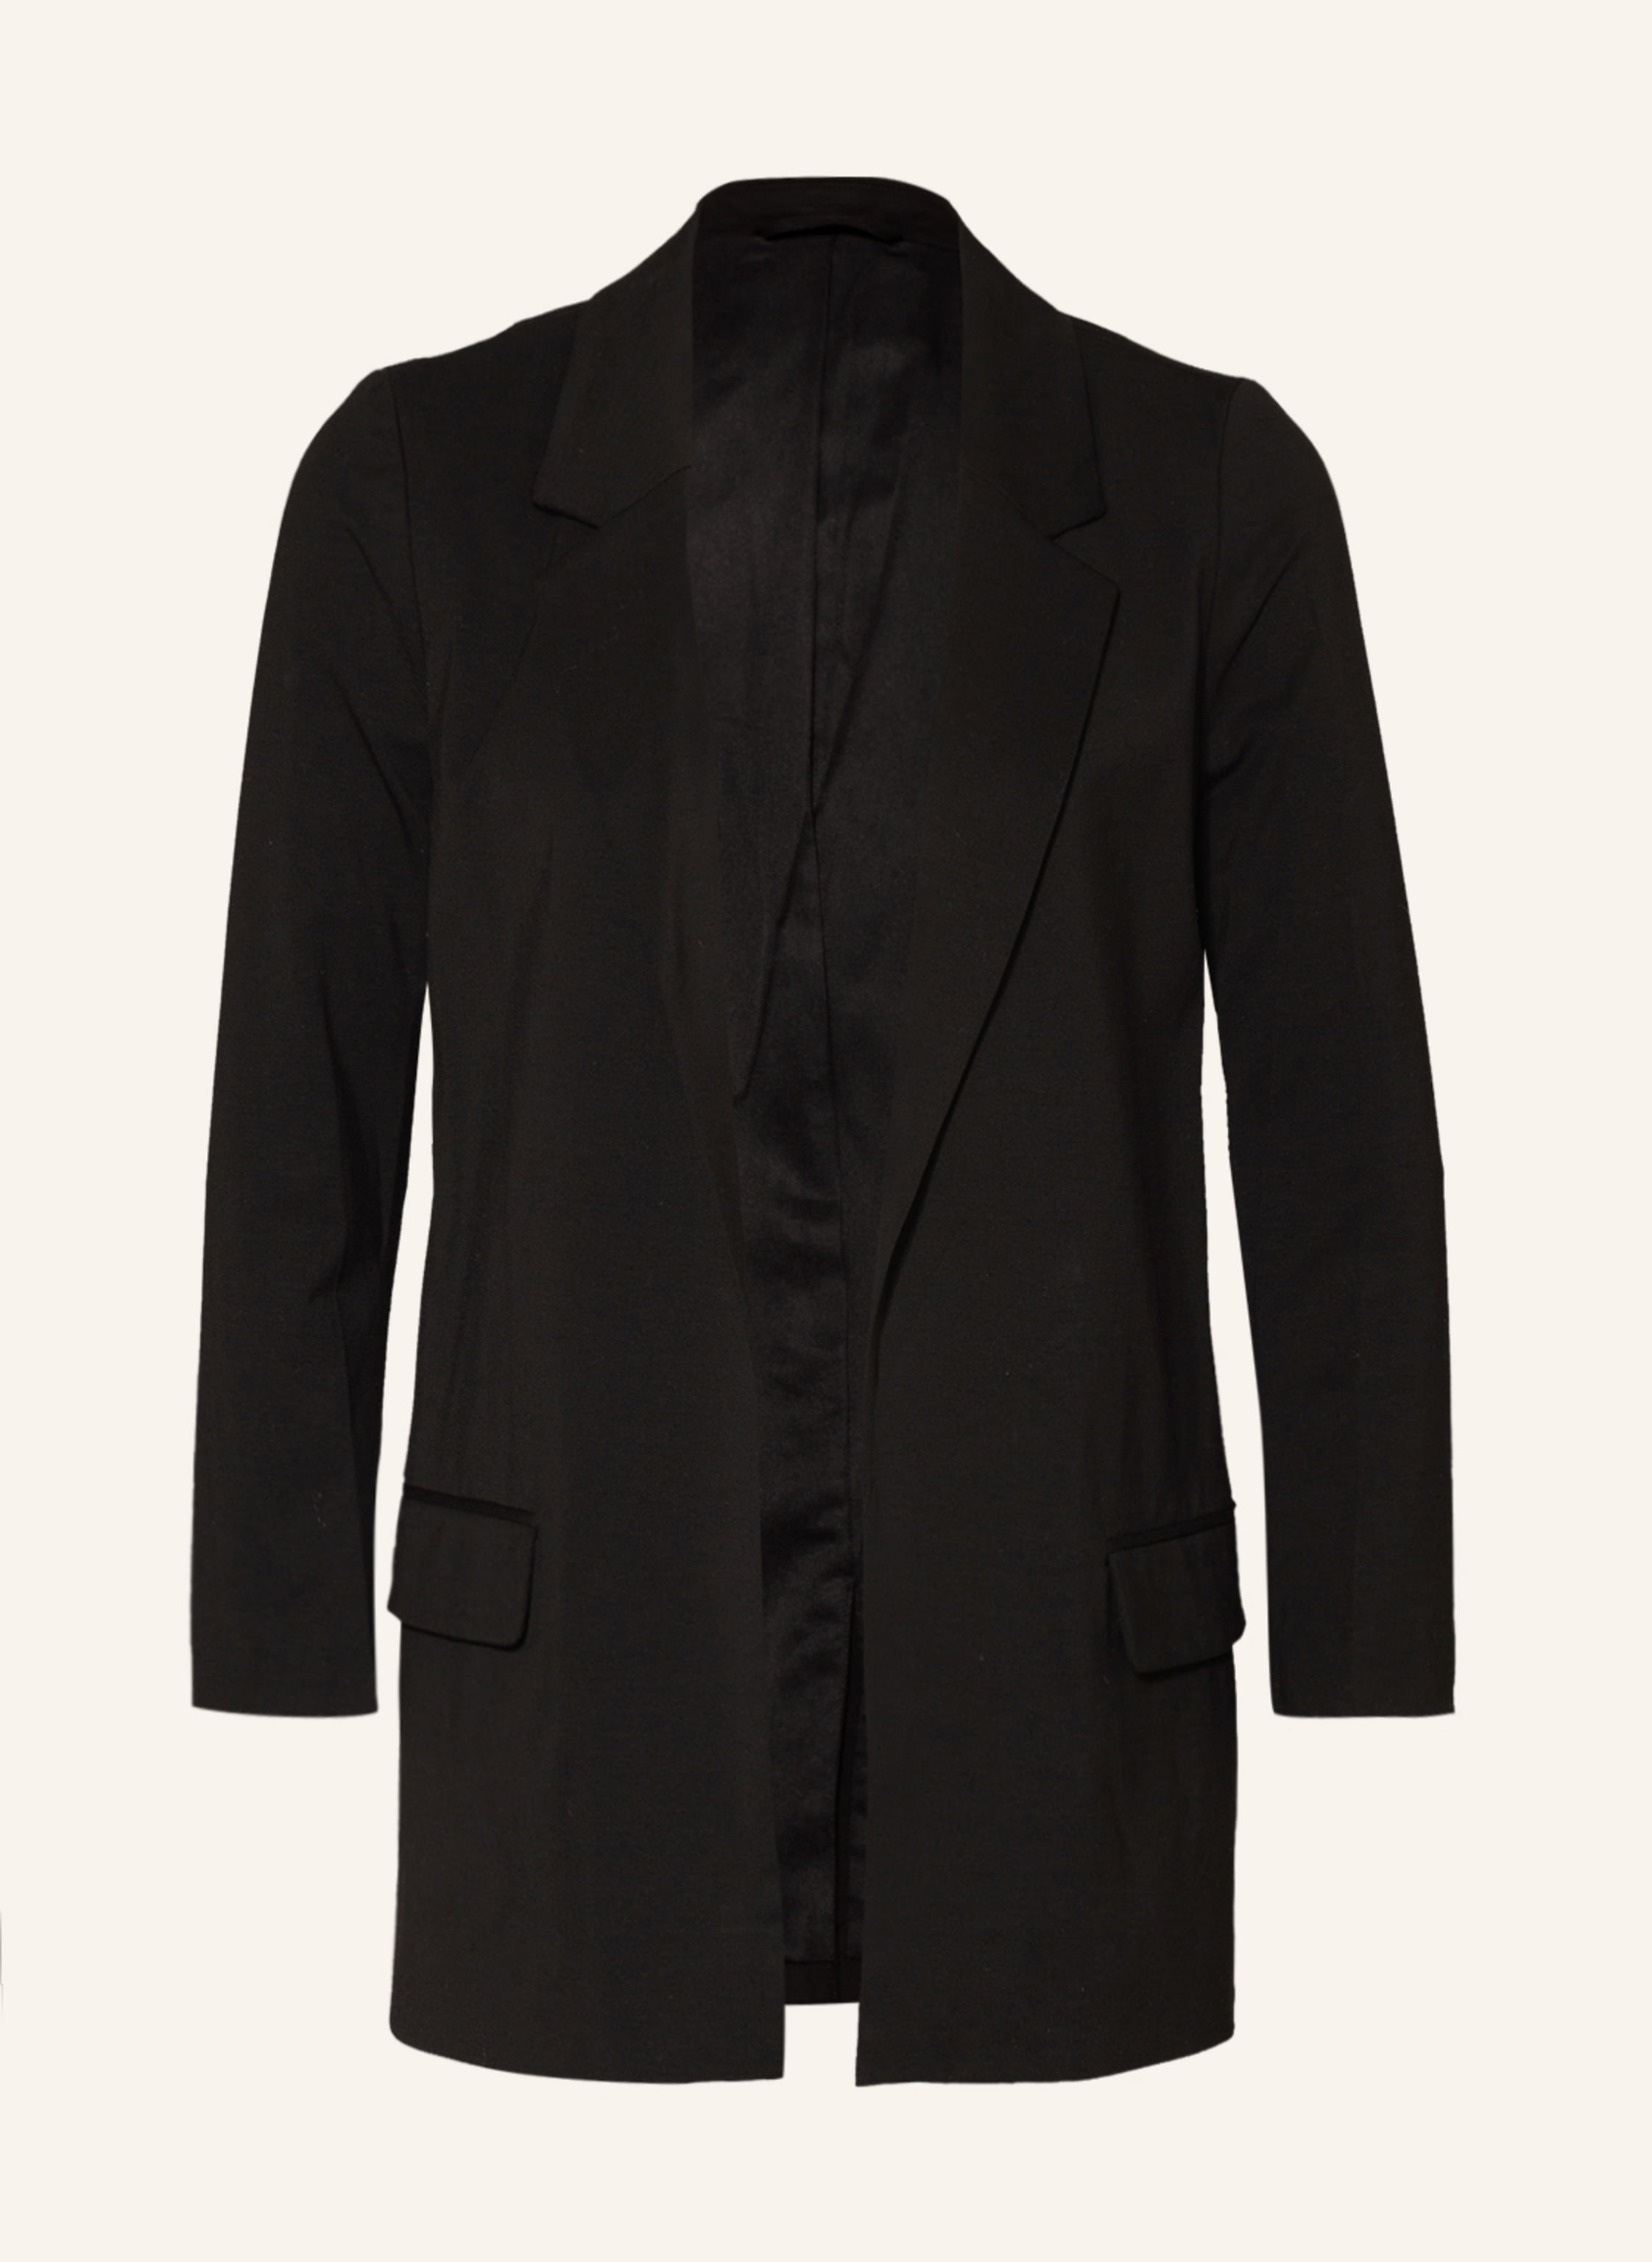 ALLSAINTS Jersey blazer ALEIDA with 3/4 sleeves in black